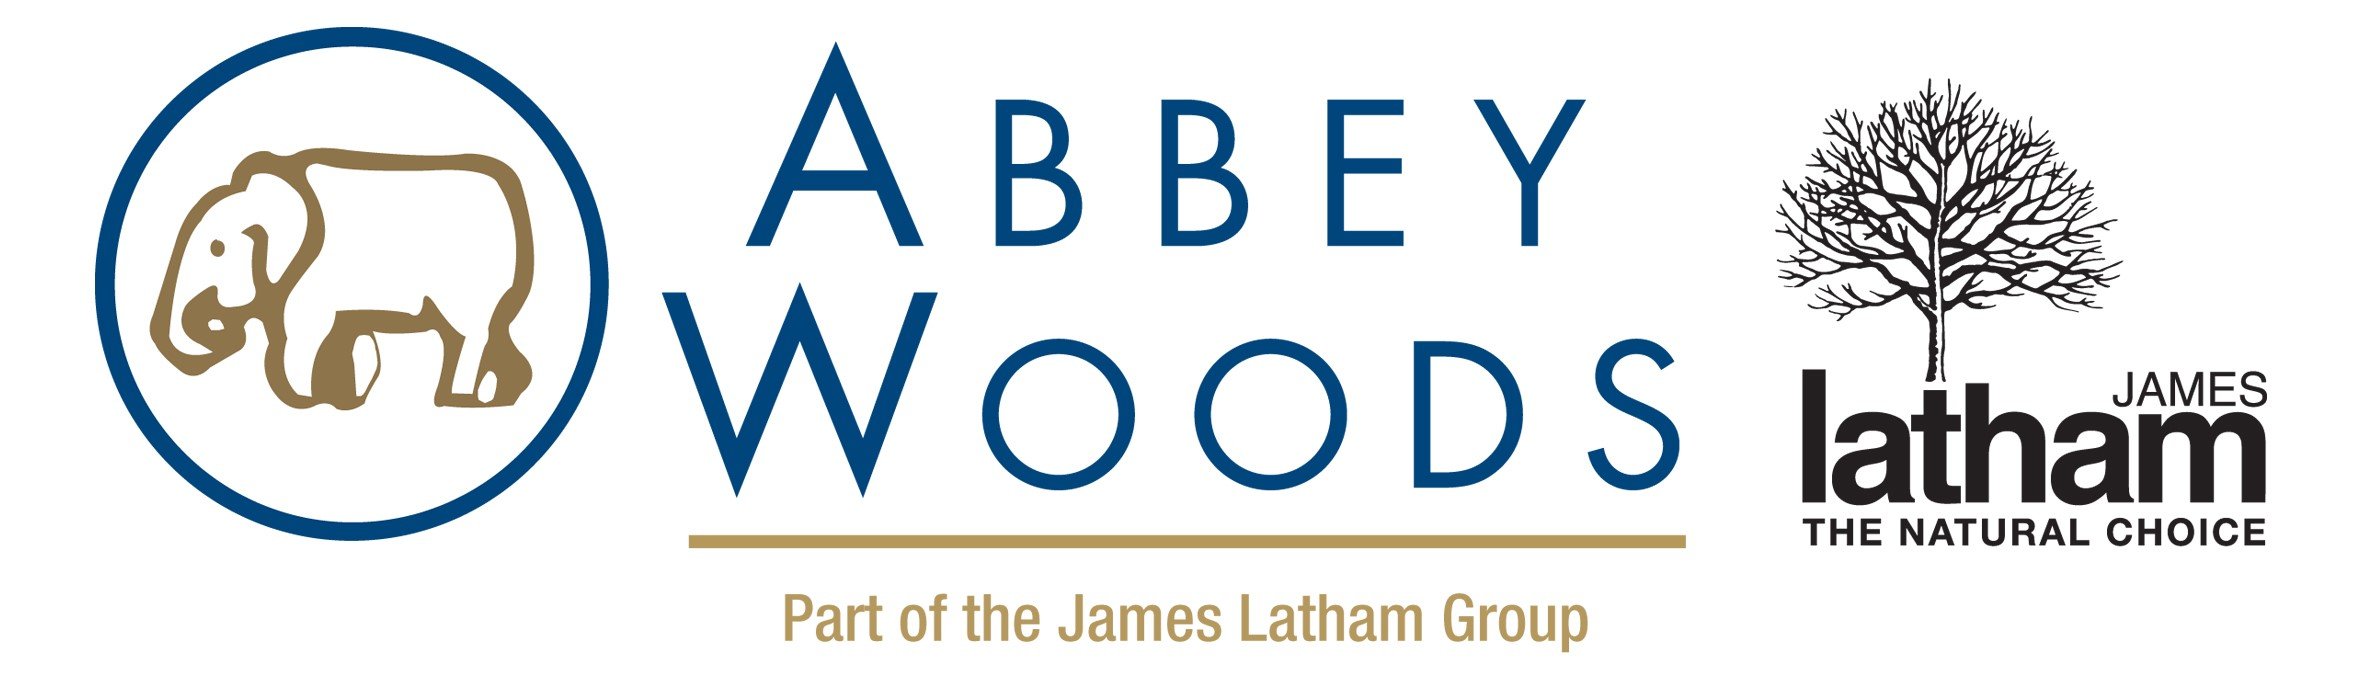 Abbey Woods Agencies Ltd logo